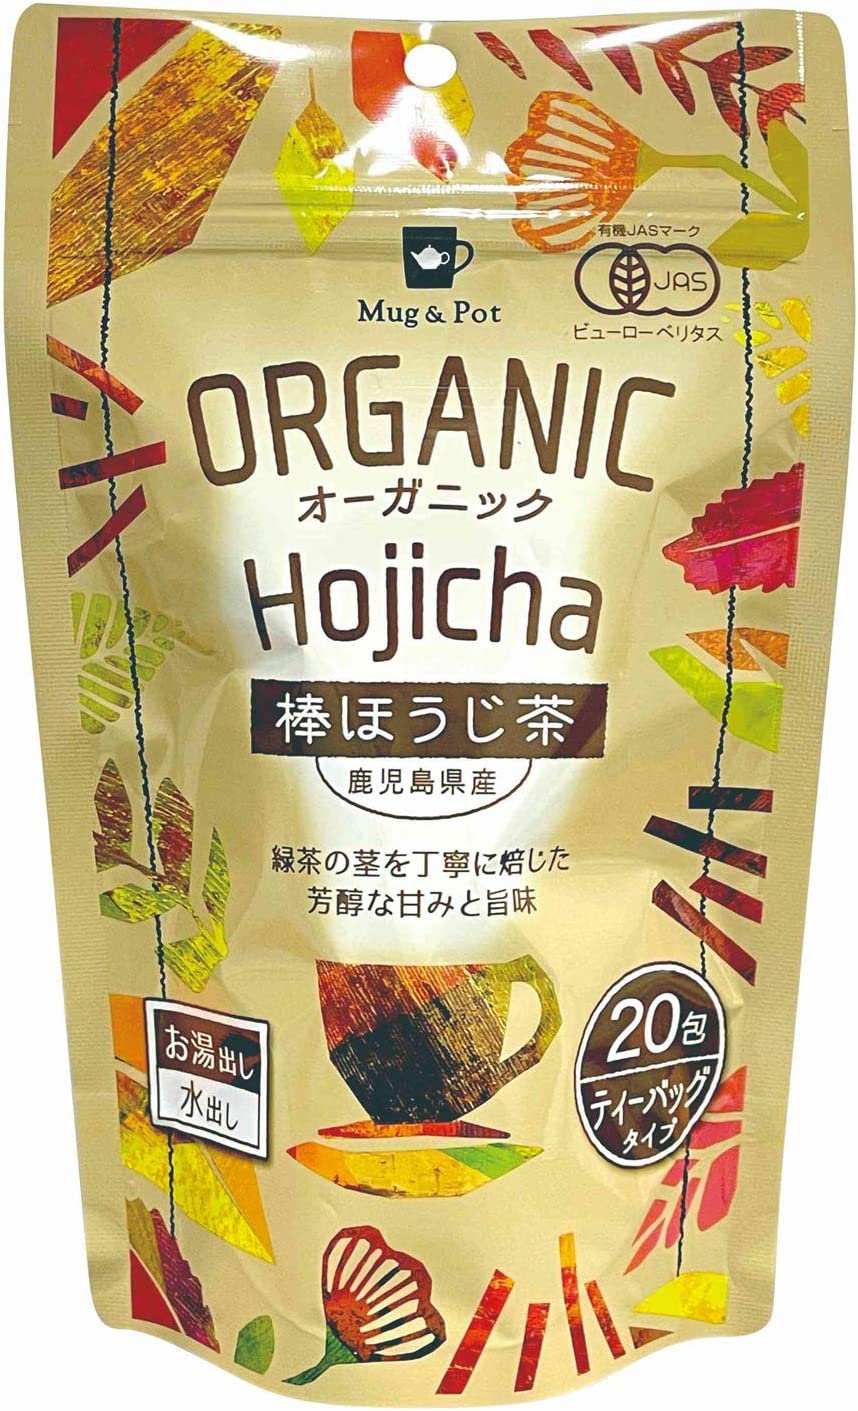 Tokyo Tea Trading Organic Hojicha 20P x 4 Packs by Mug&amp;Pot - NihonMura